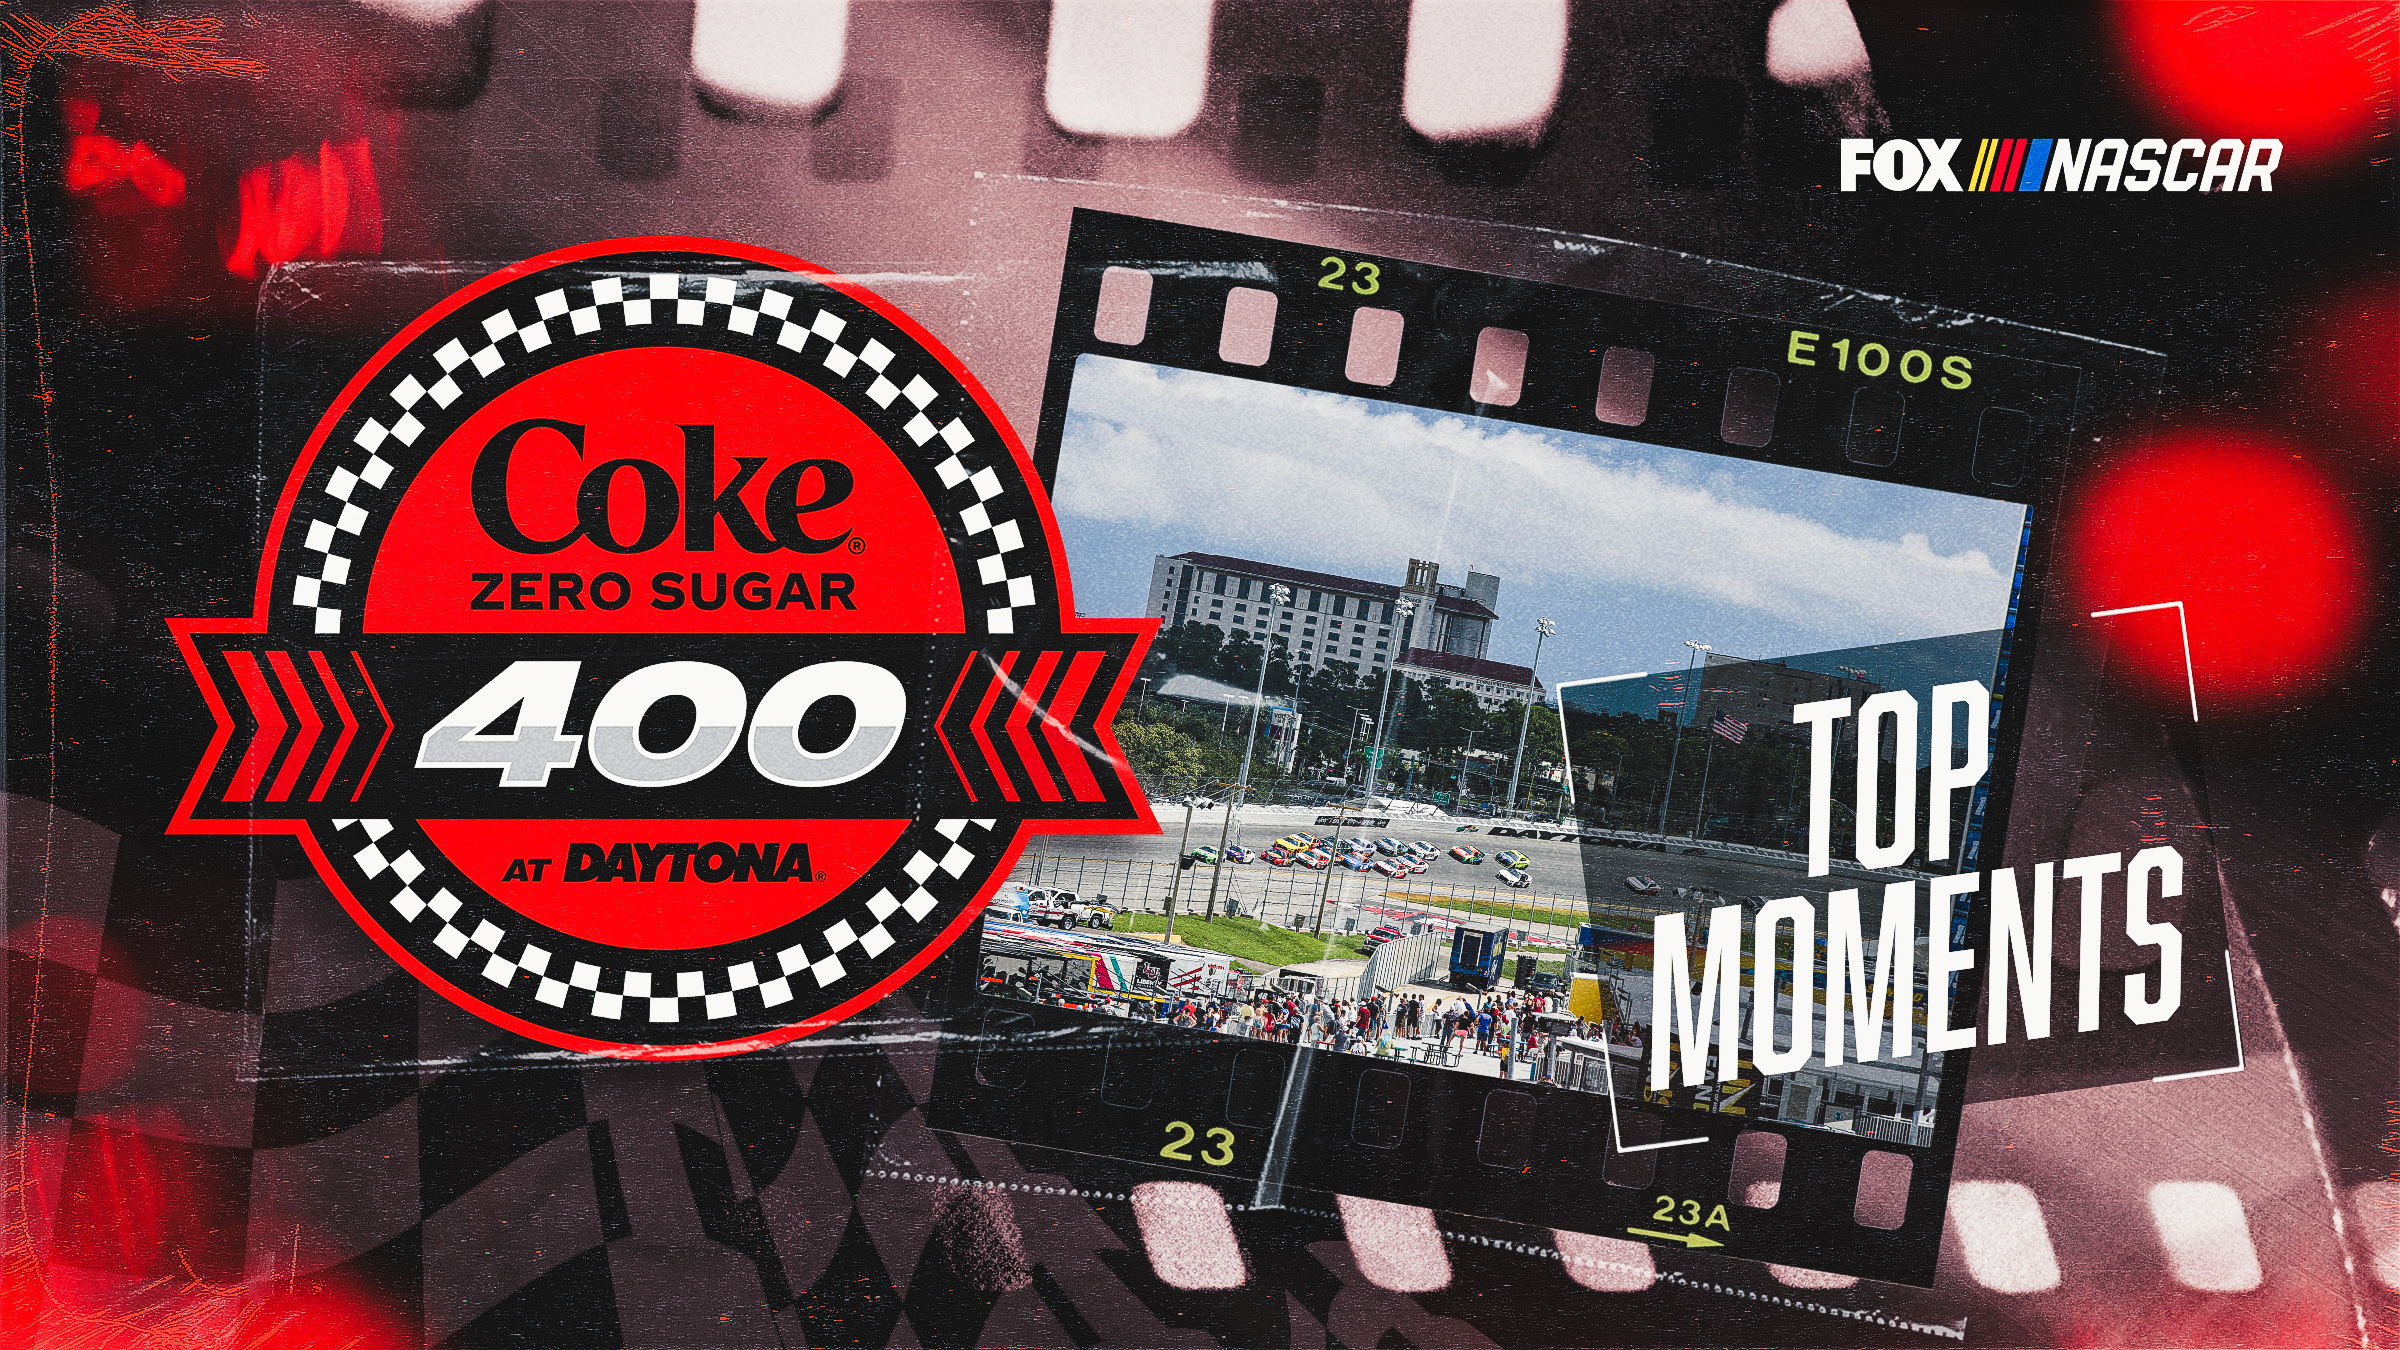 Coke Zero Sugar 400 live updates: Top moments from Daytona